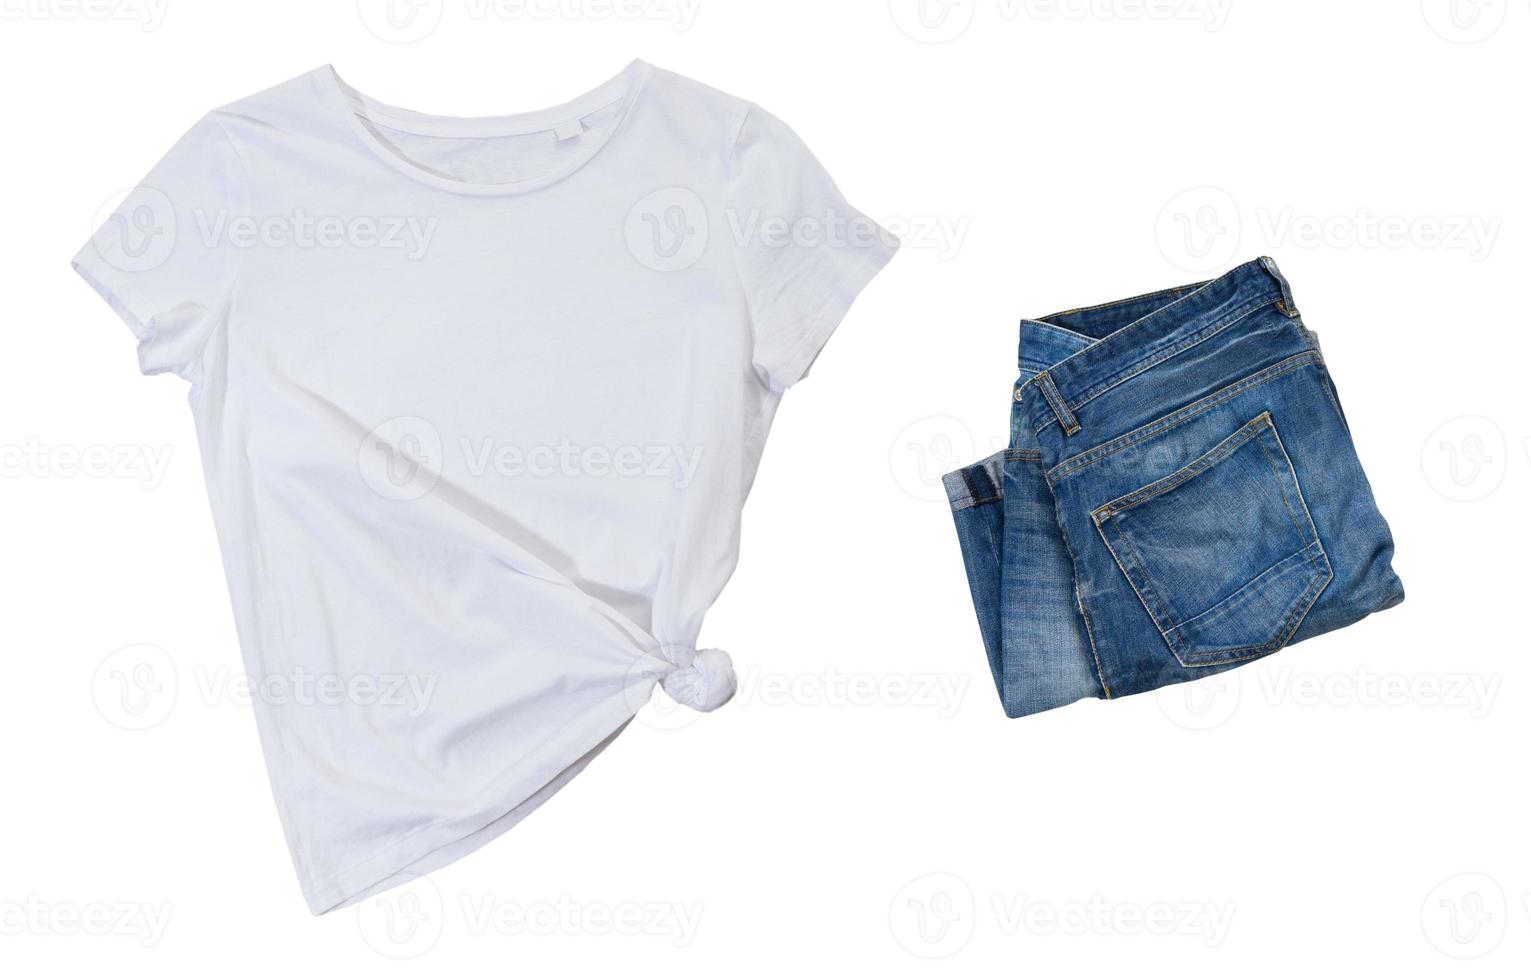 maglietta bianca vuota e denim blu su sfondo bianco, maglietta nera mock up e jeans blu, maglietta vuota foto